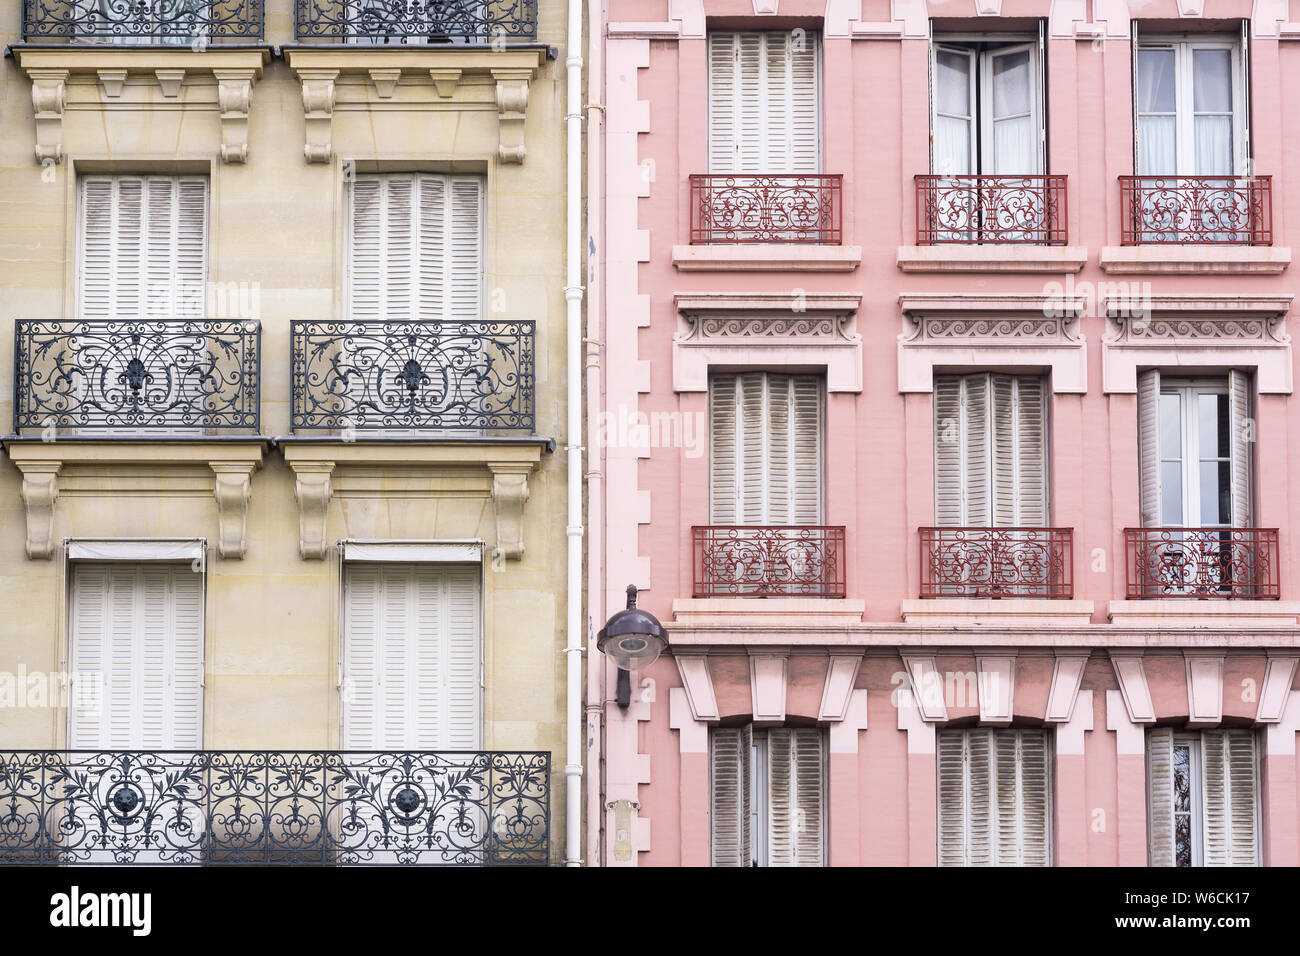 París colorida fachada de edificio - una fachada de estilo Haussmann en París, Francia, Europa. Foto de stock